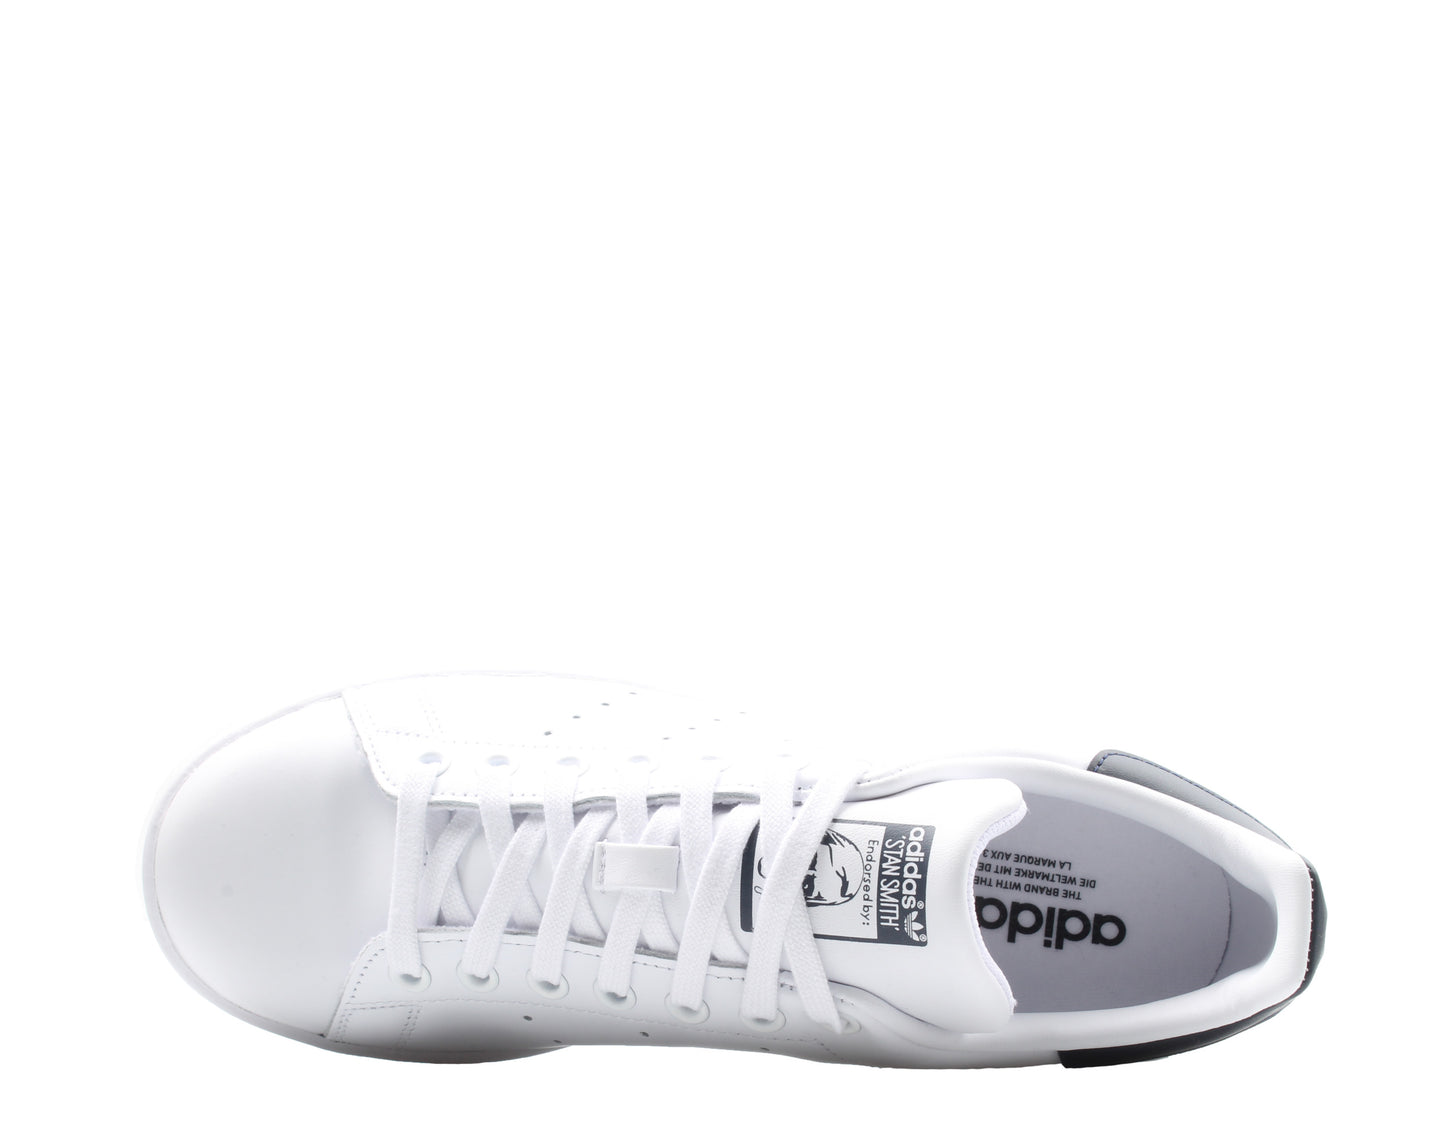 Adidas Originals Stan Smith Men's Tennis Shoes